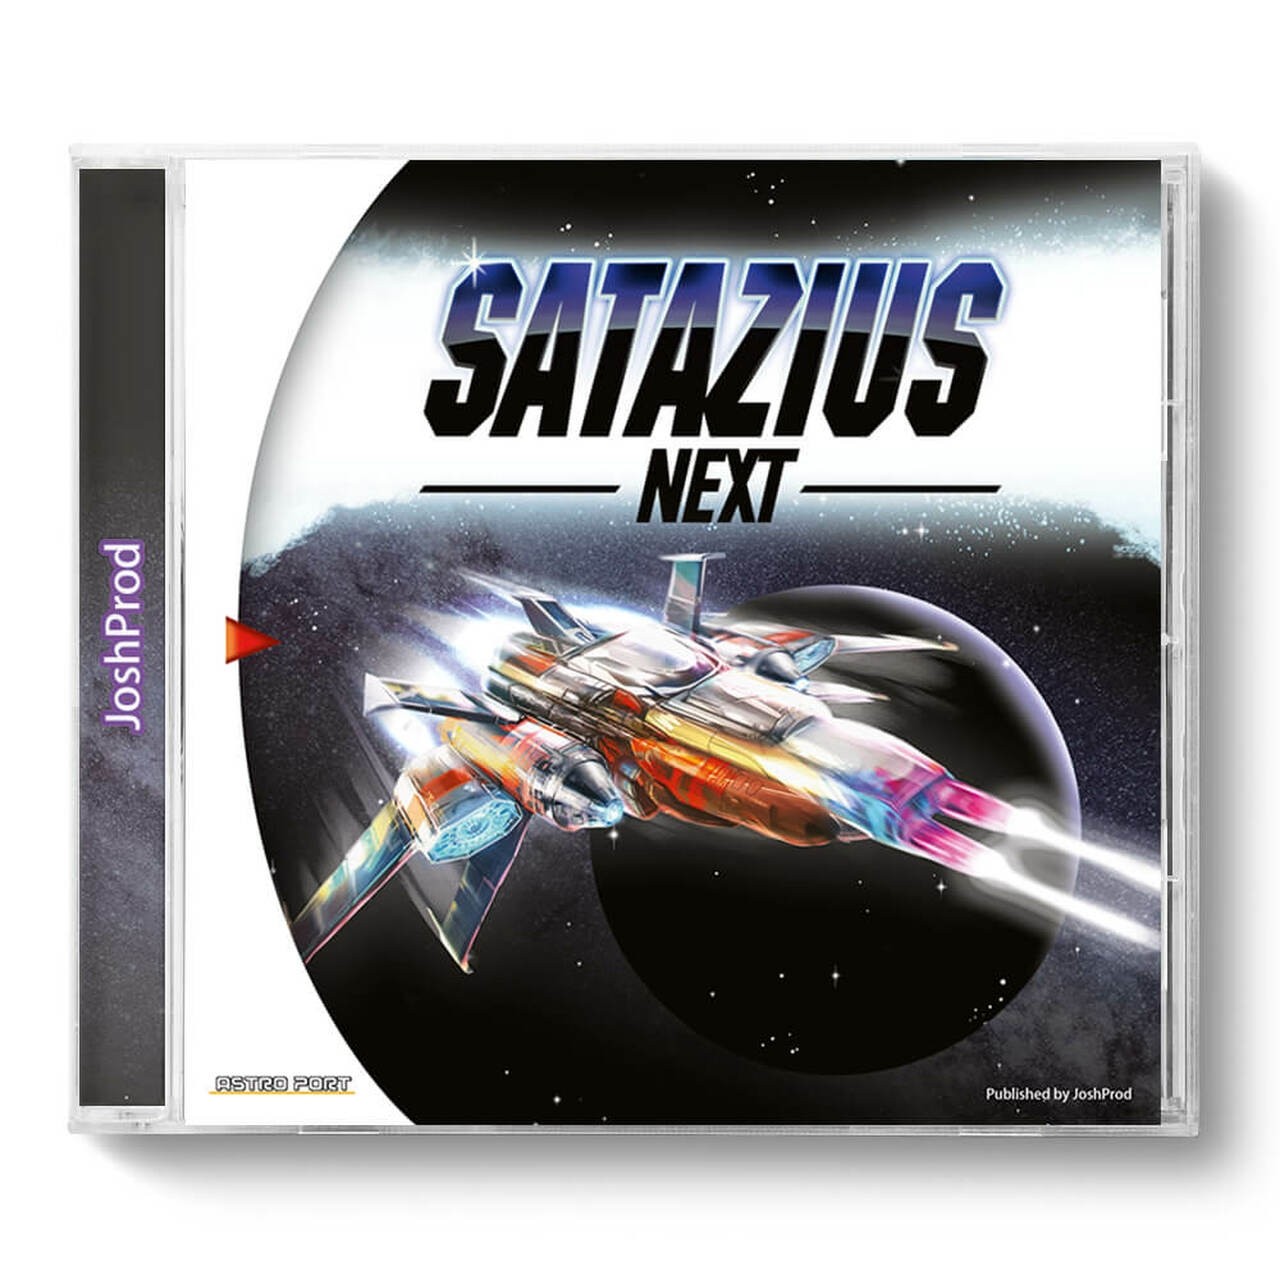 Satazius Next for Dreamcast